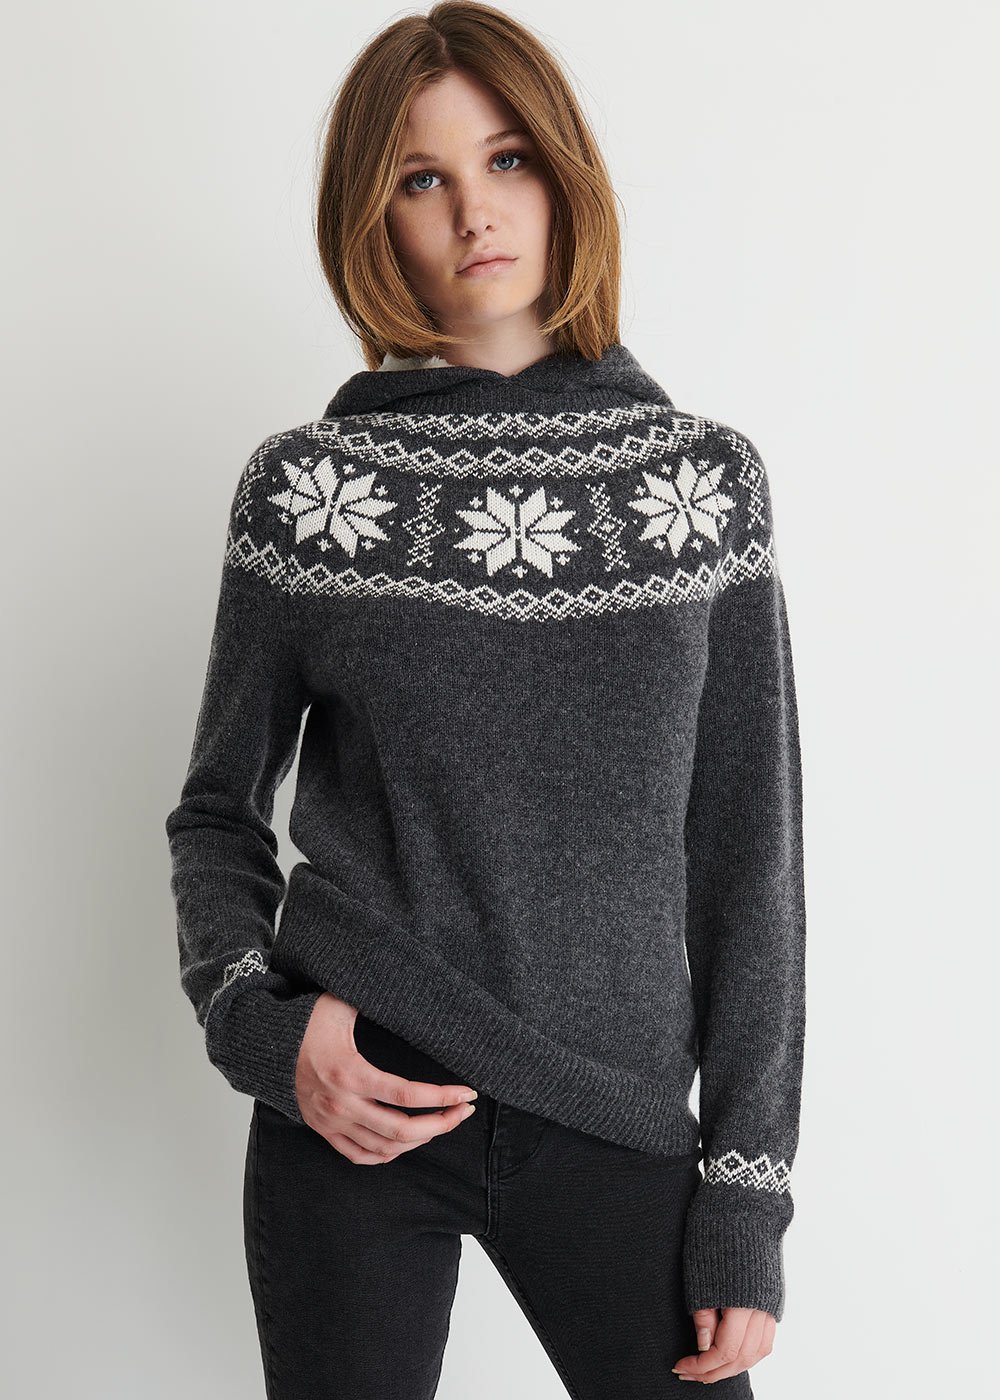 Maryan Wool Blend Sweater with Hood - Black / Grey melange - Woman